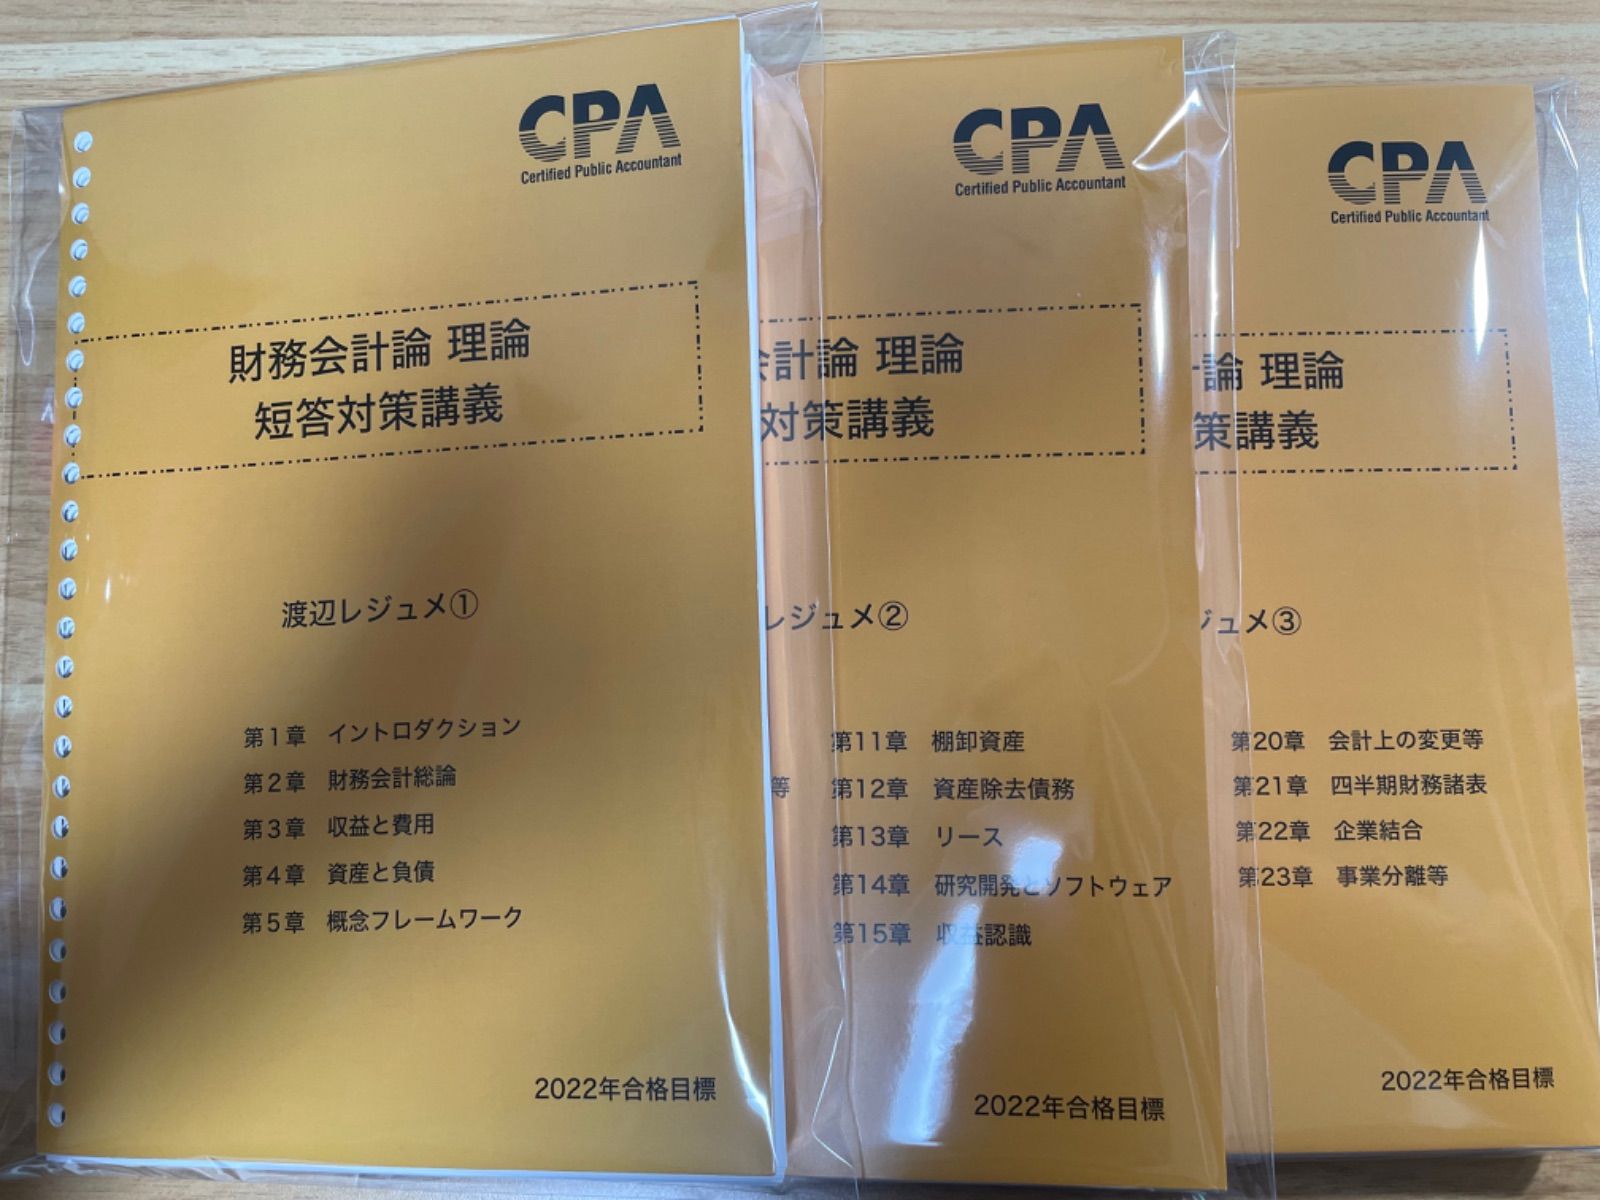 CPA 2022年目標 財務会計論 理論 短答対策講義 渡辺レジュメ①〜③ 